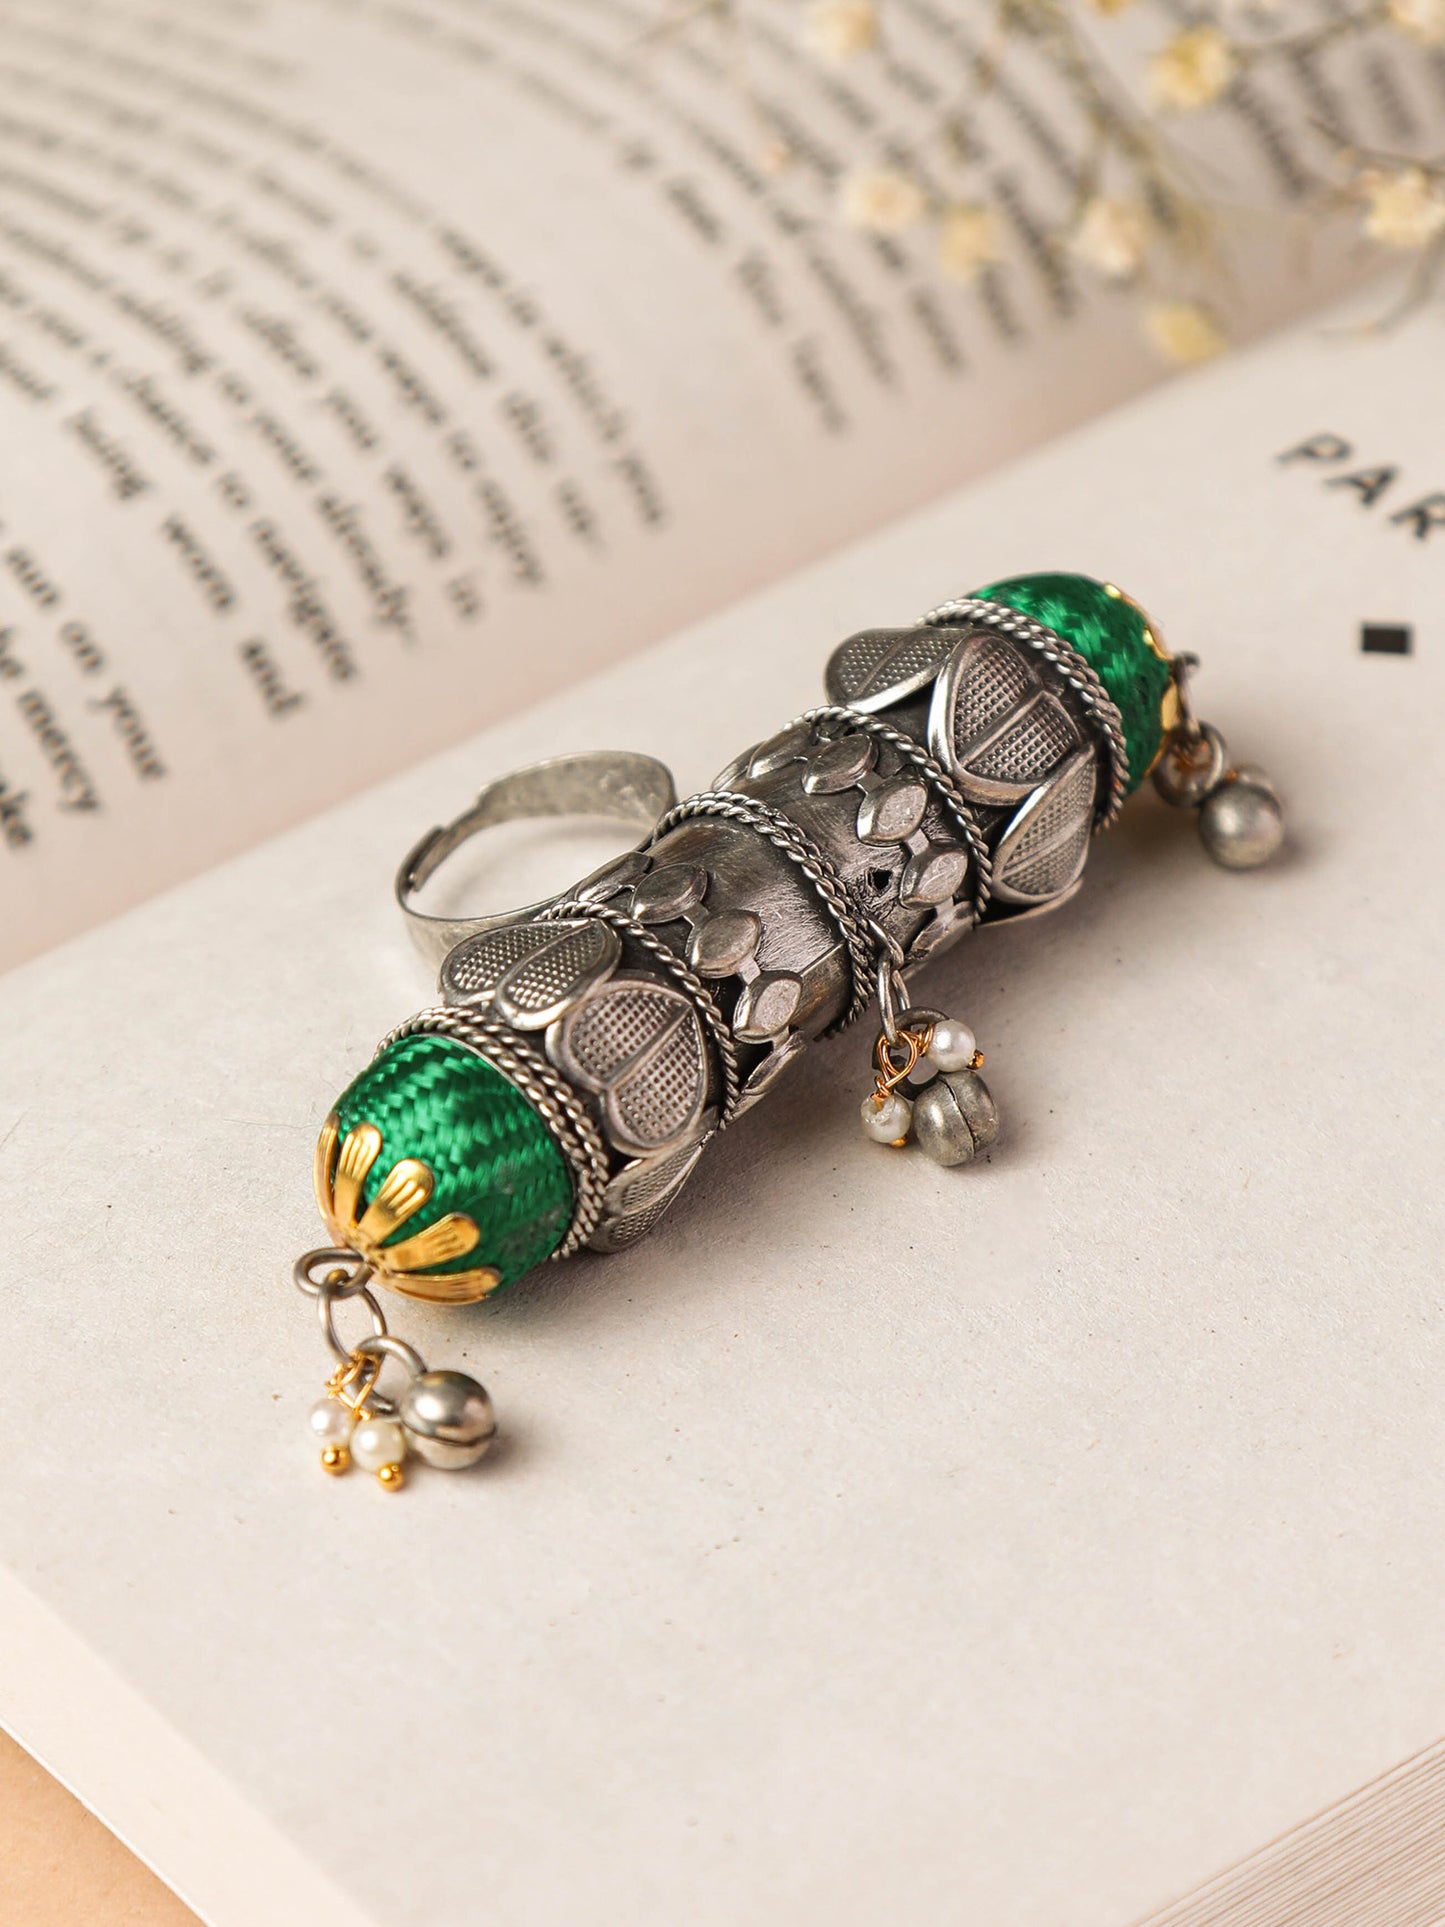 The Green Jewel Caterpillar Ring